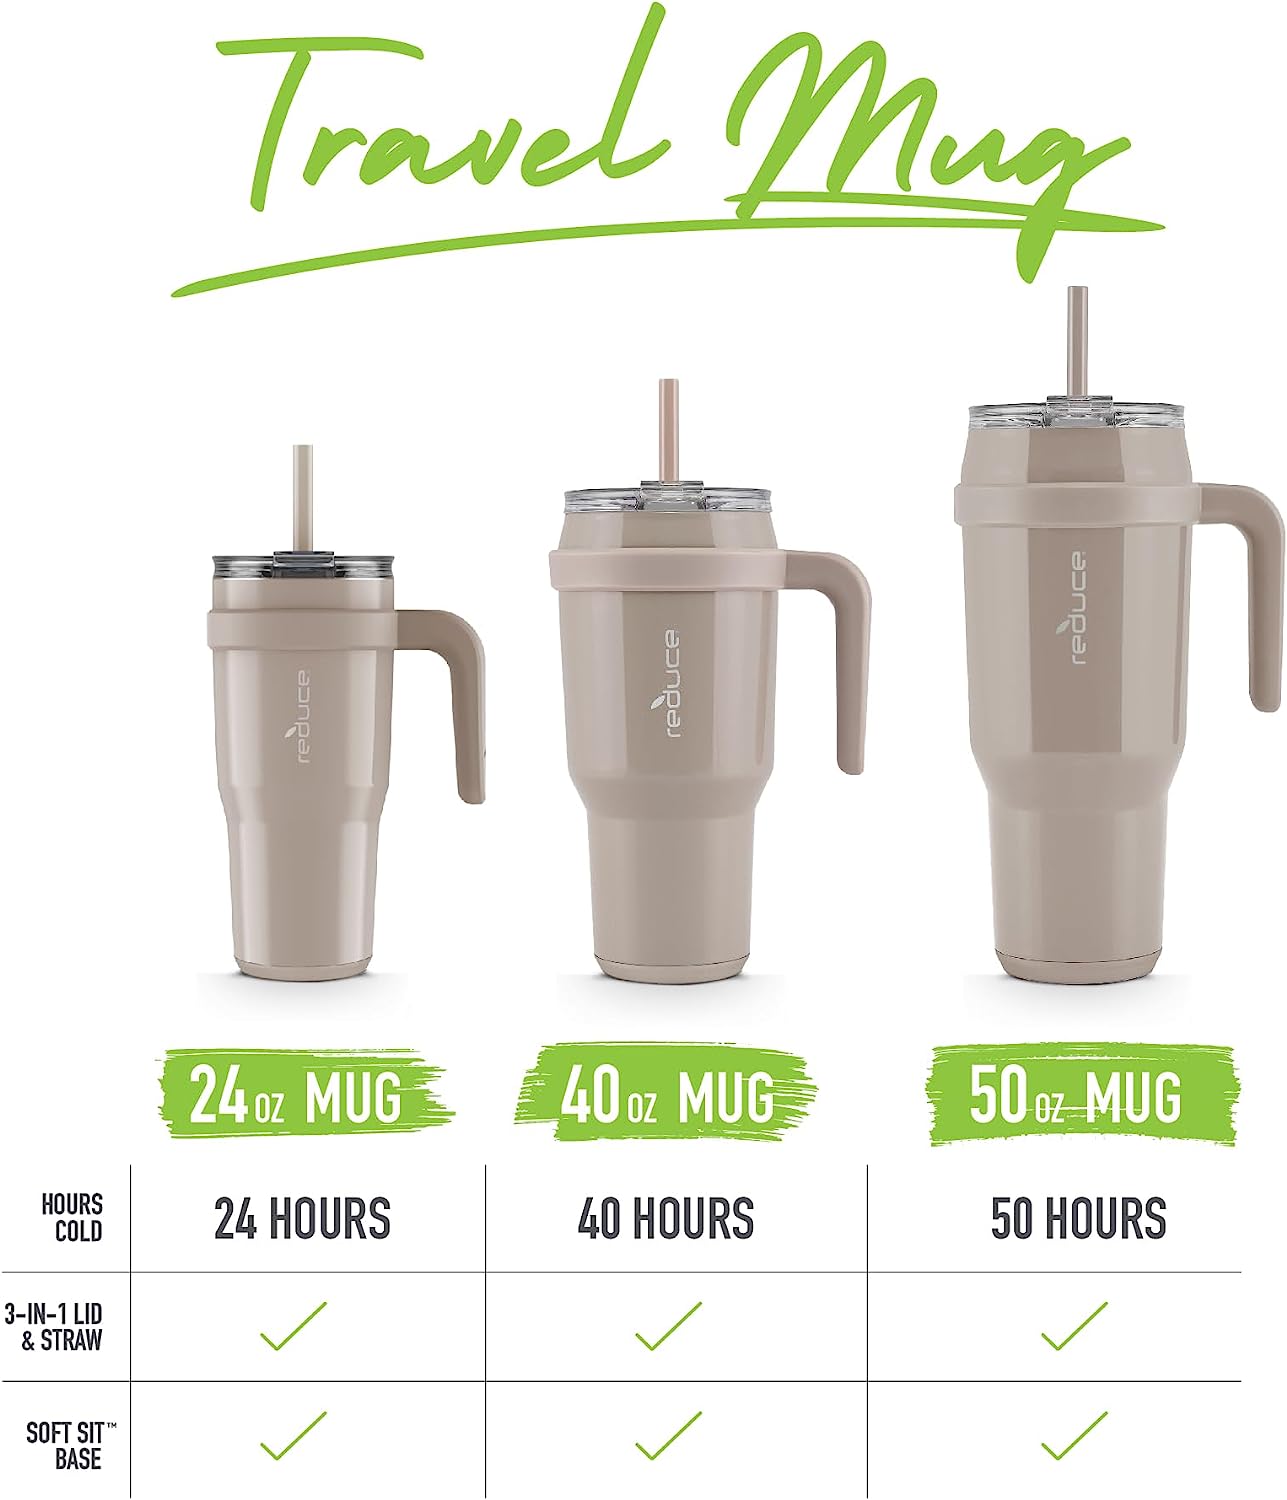 Reduce Cold1 Travel Mug 50 oz Sand